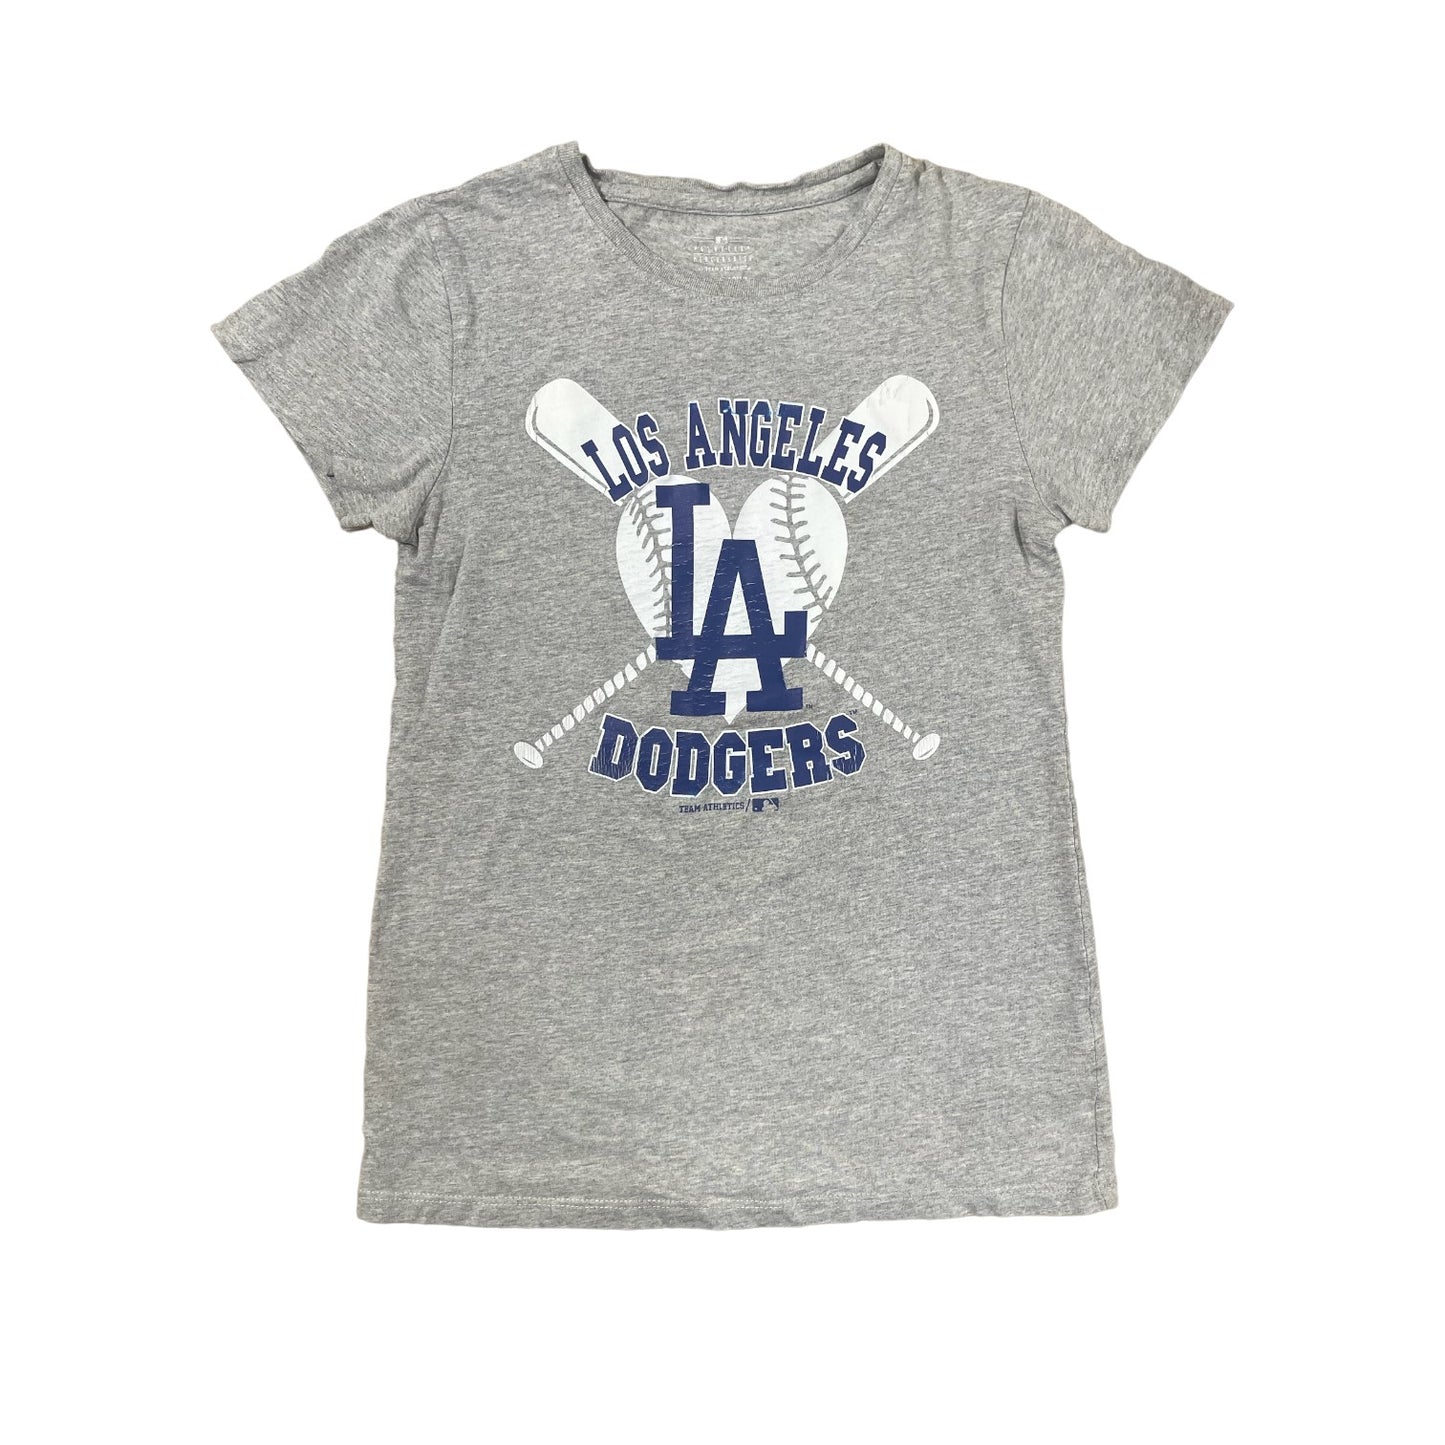 Los Angeles Dodgers Baseball Tee Girls Size M 10-12